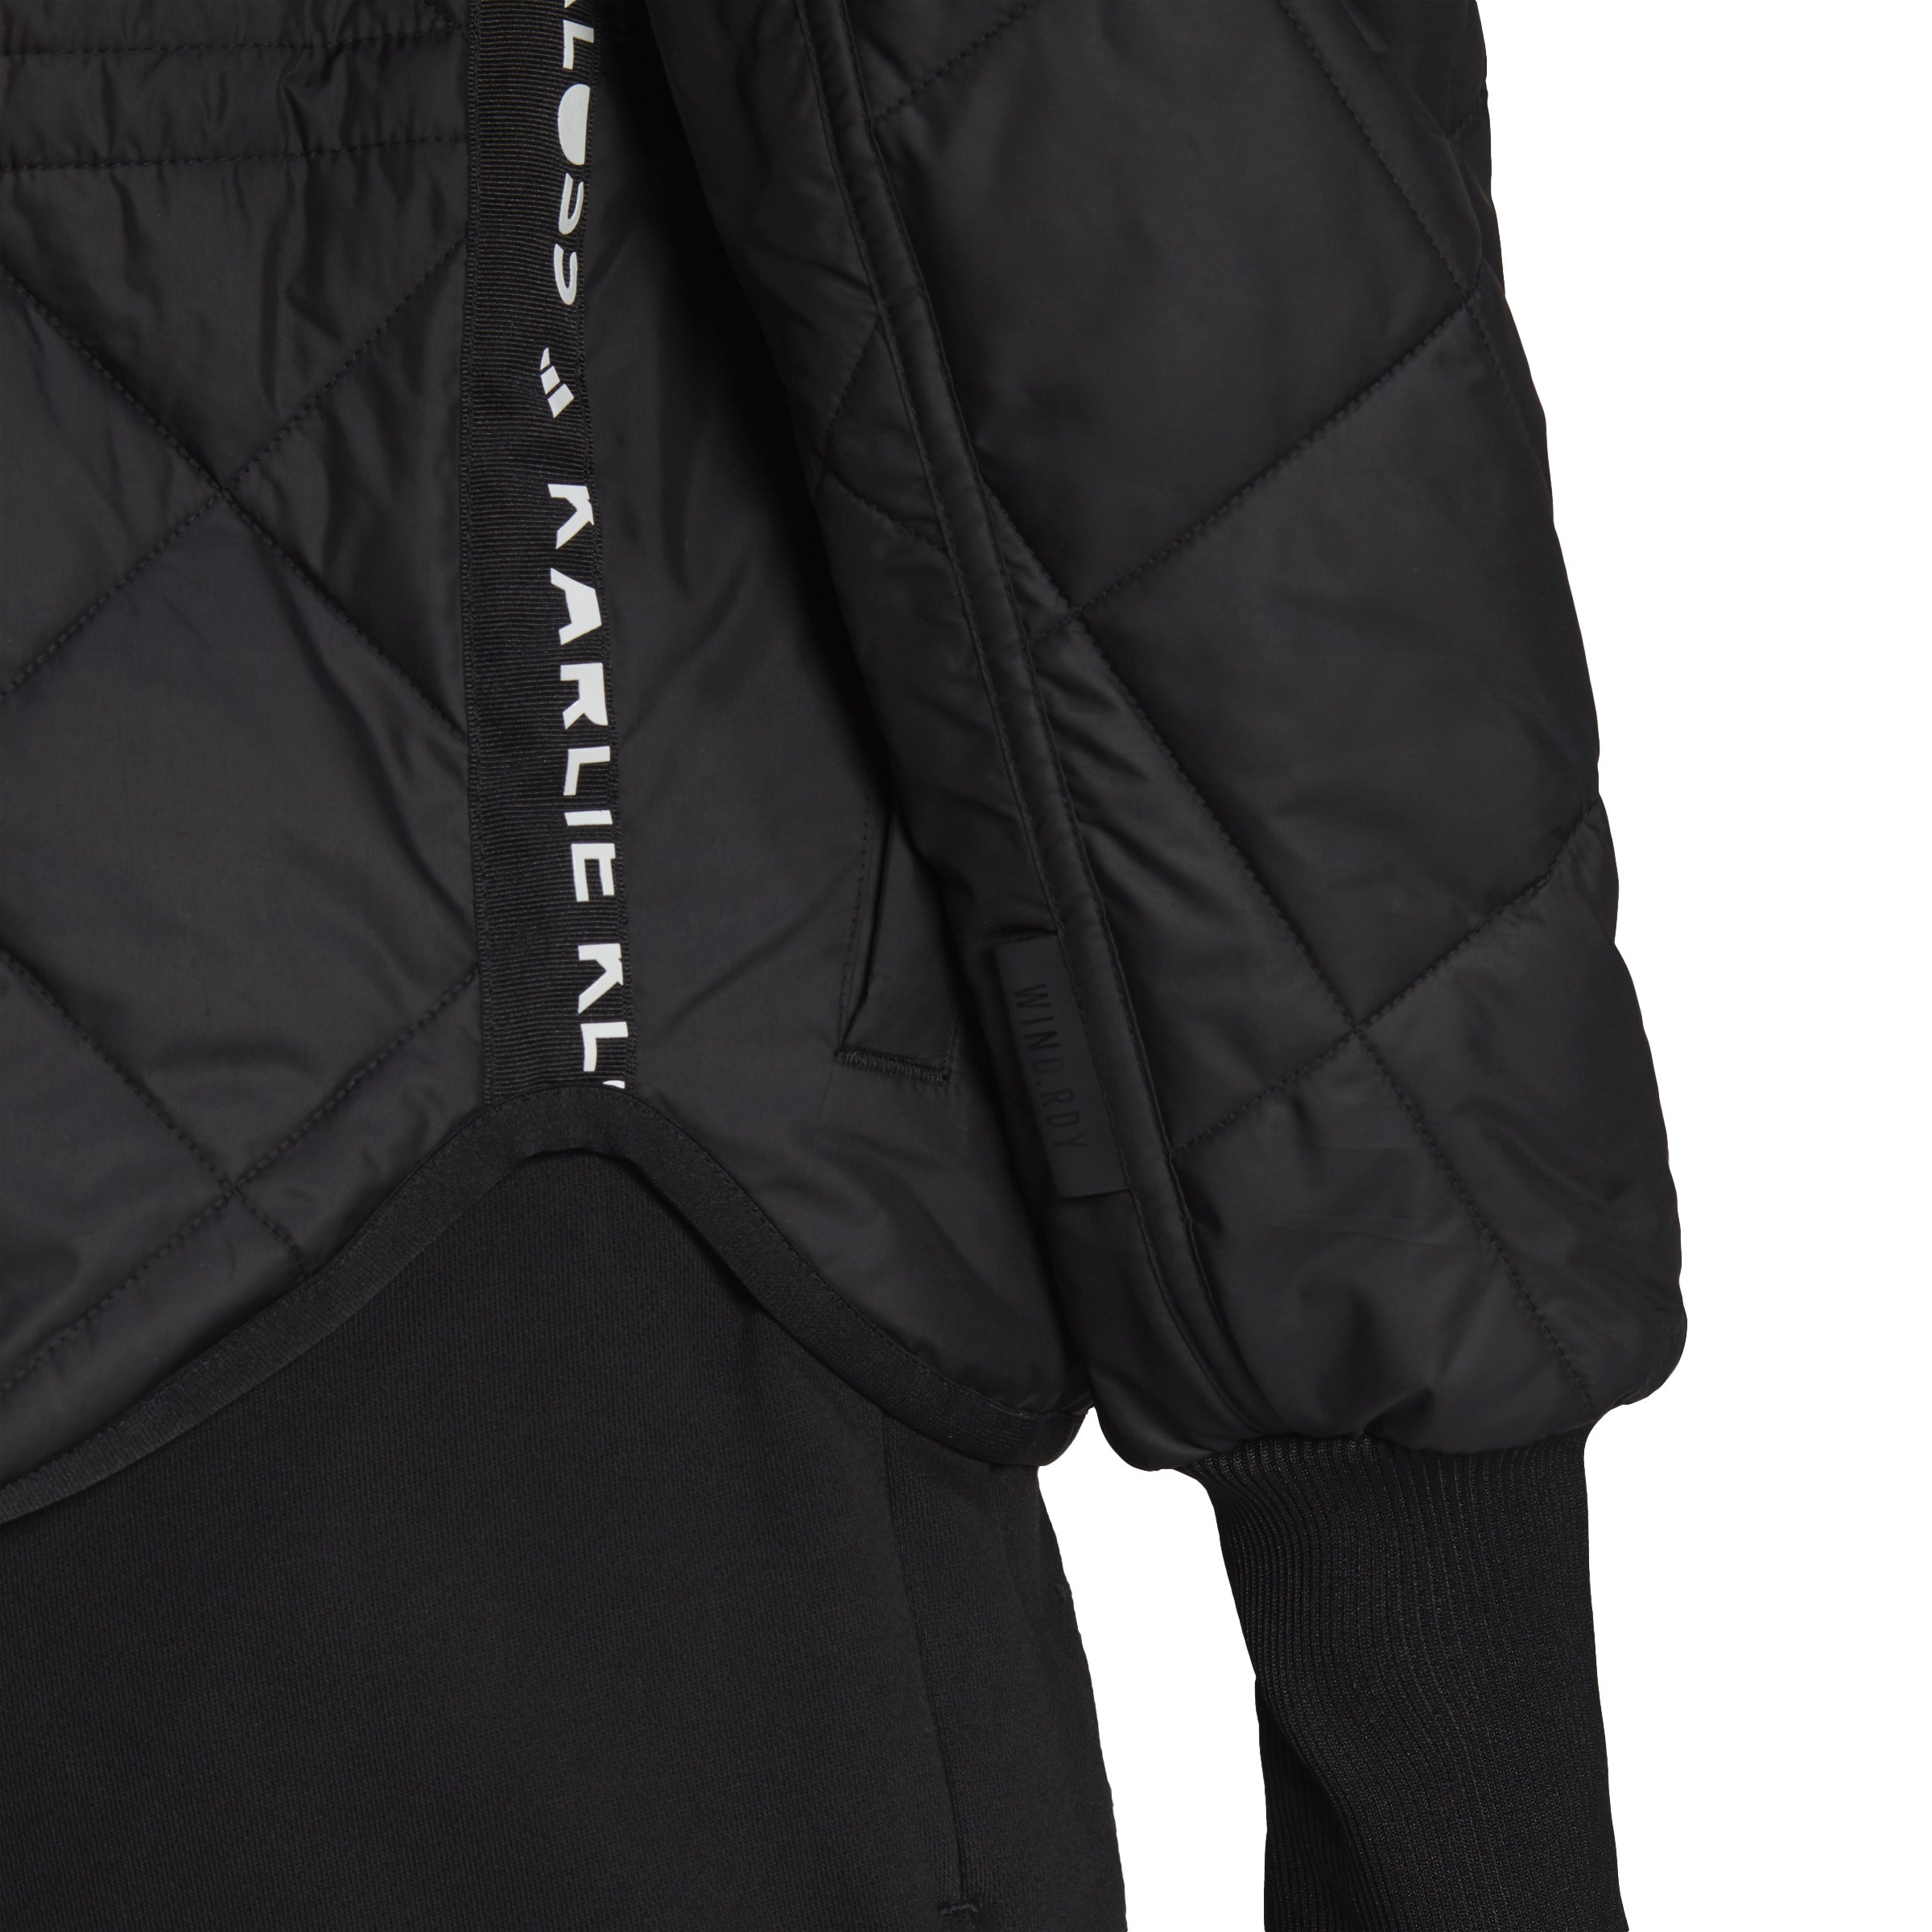 adidas Women Jacket Karlie Kloss Light Padded Jacket